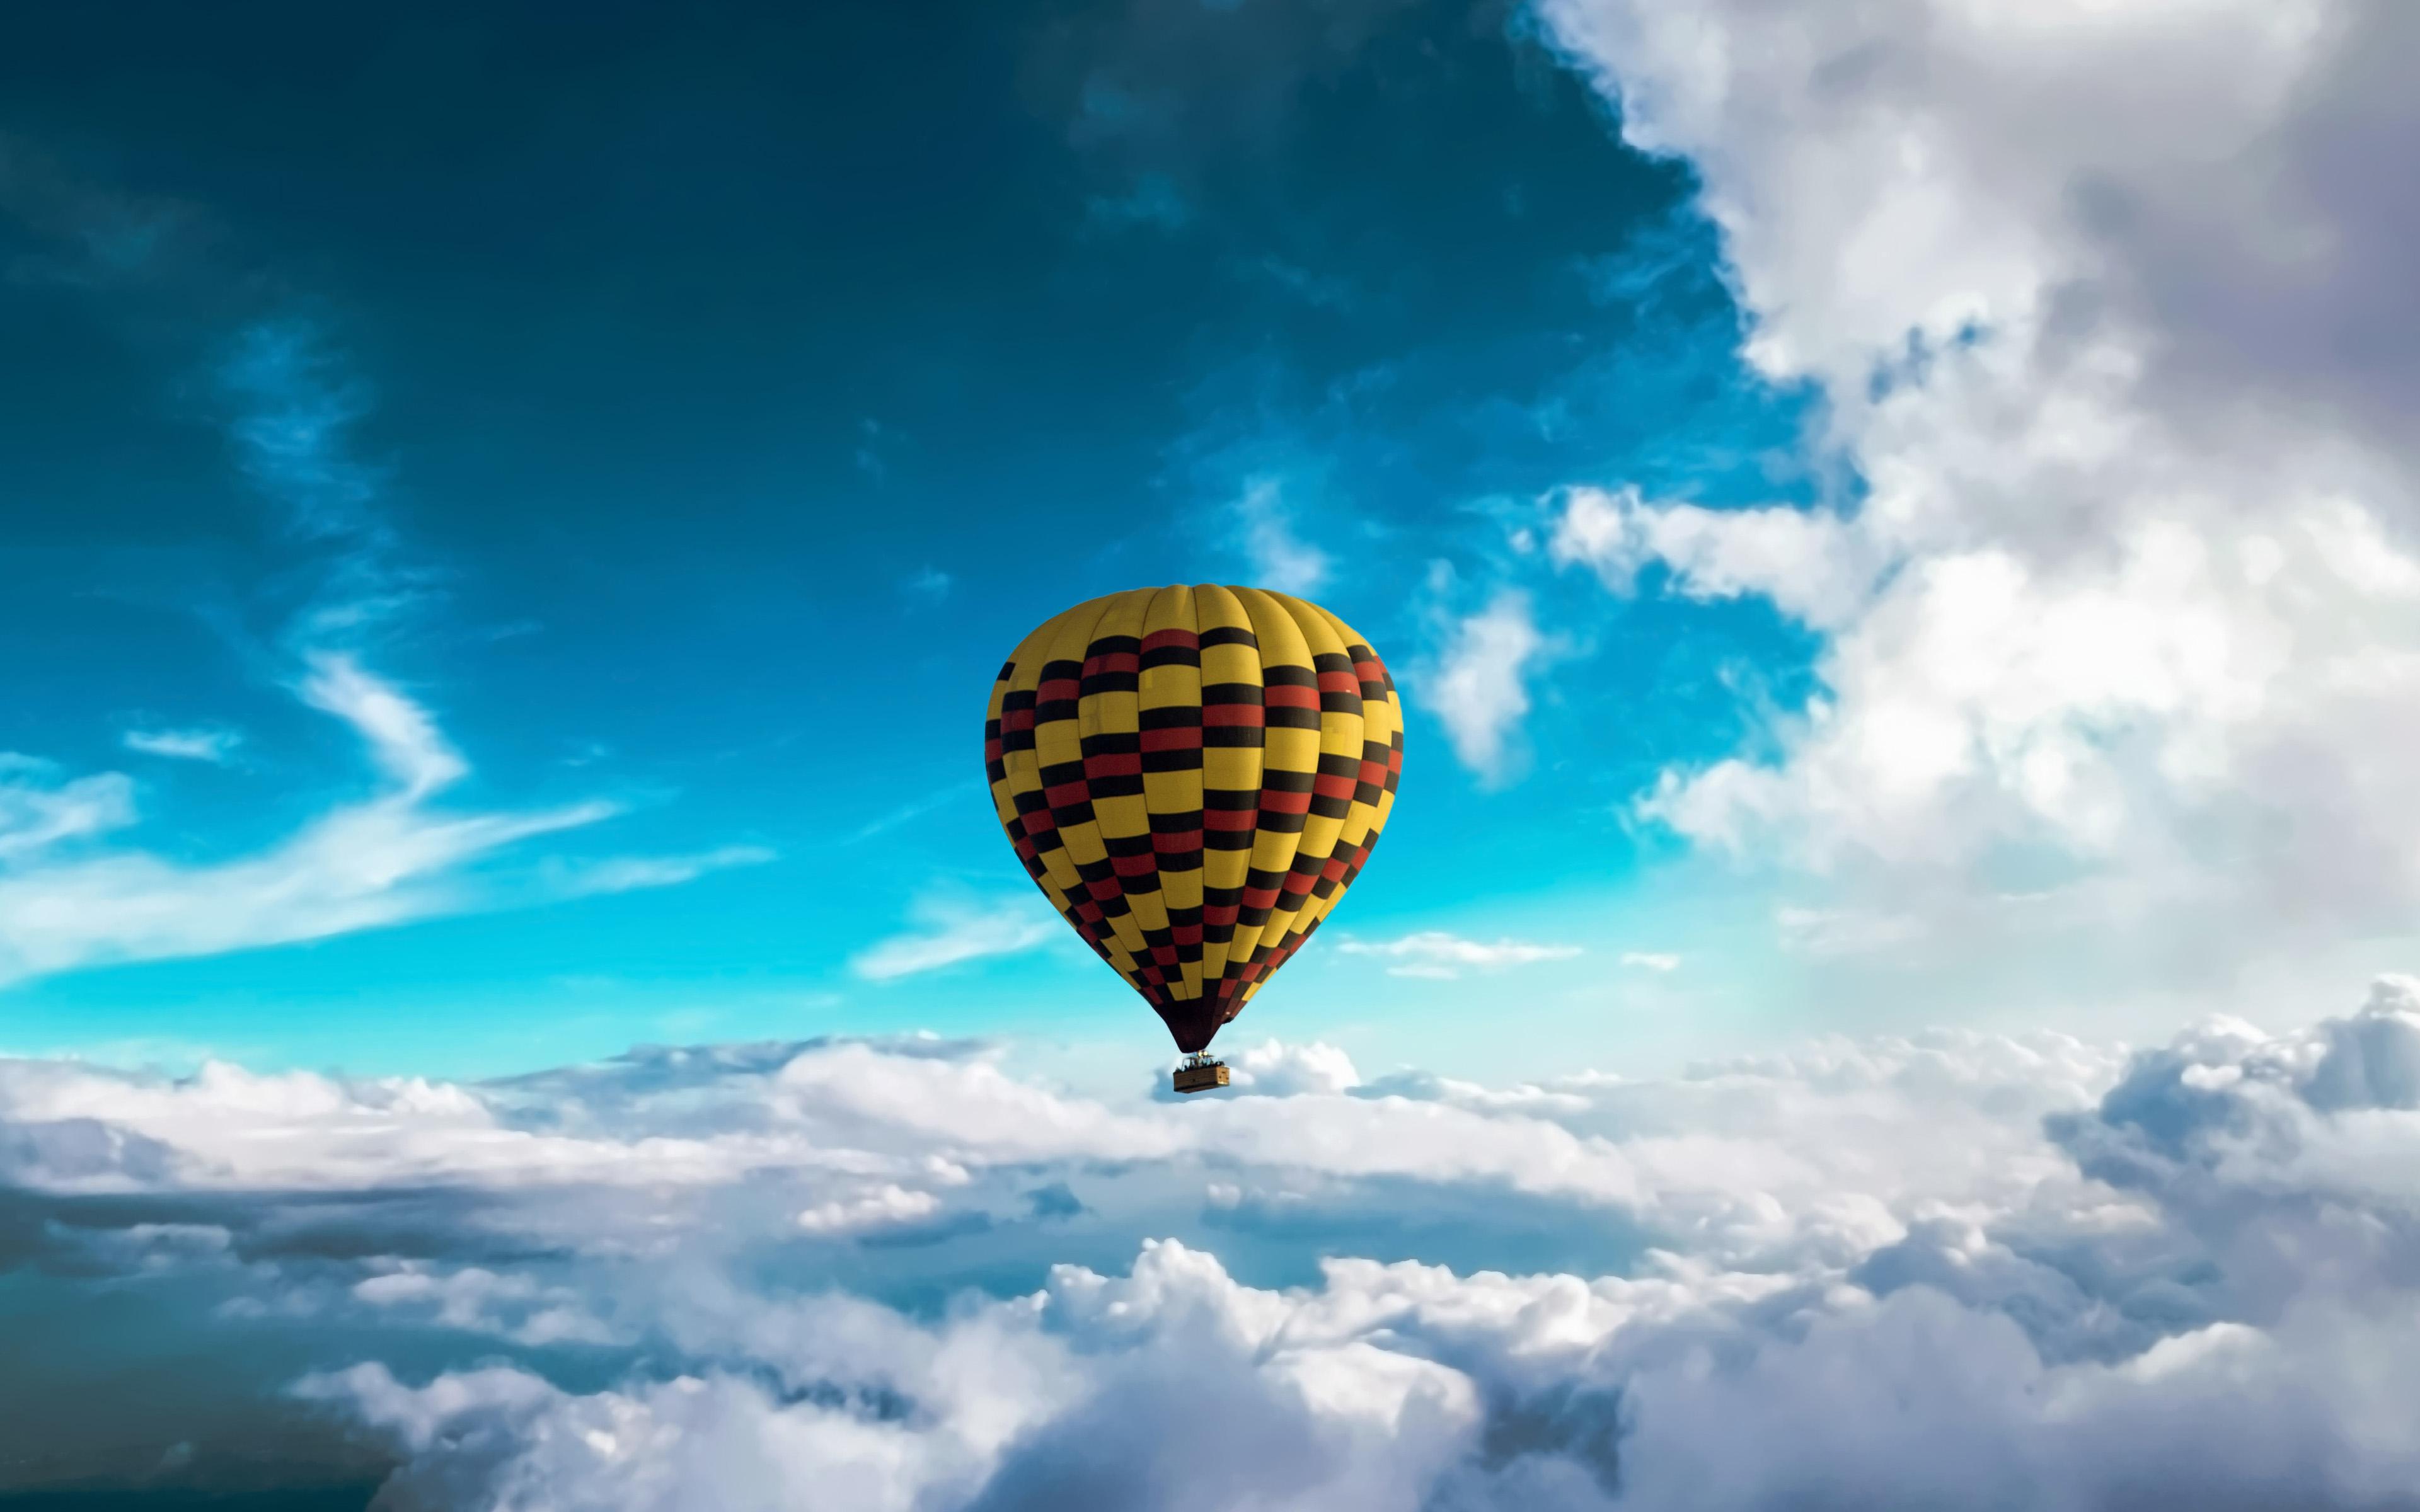 Download wallpaper air balloon, 4k, blue sky, clouds